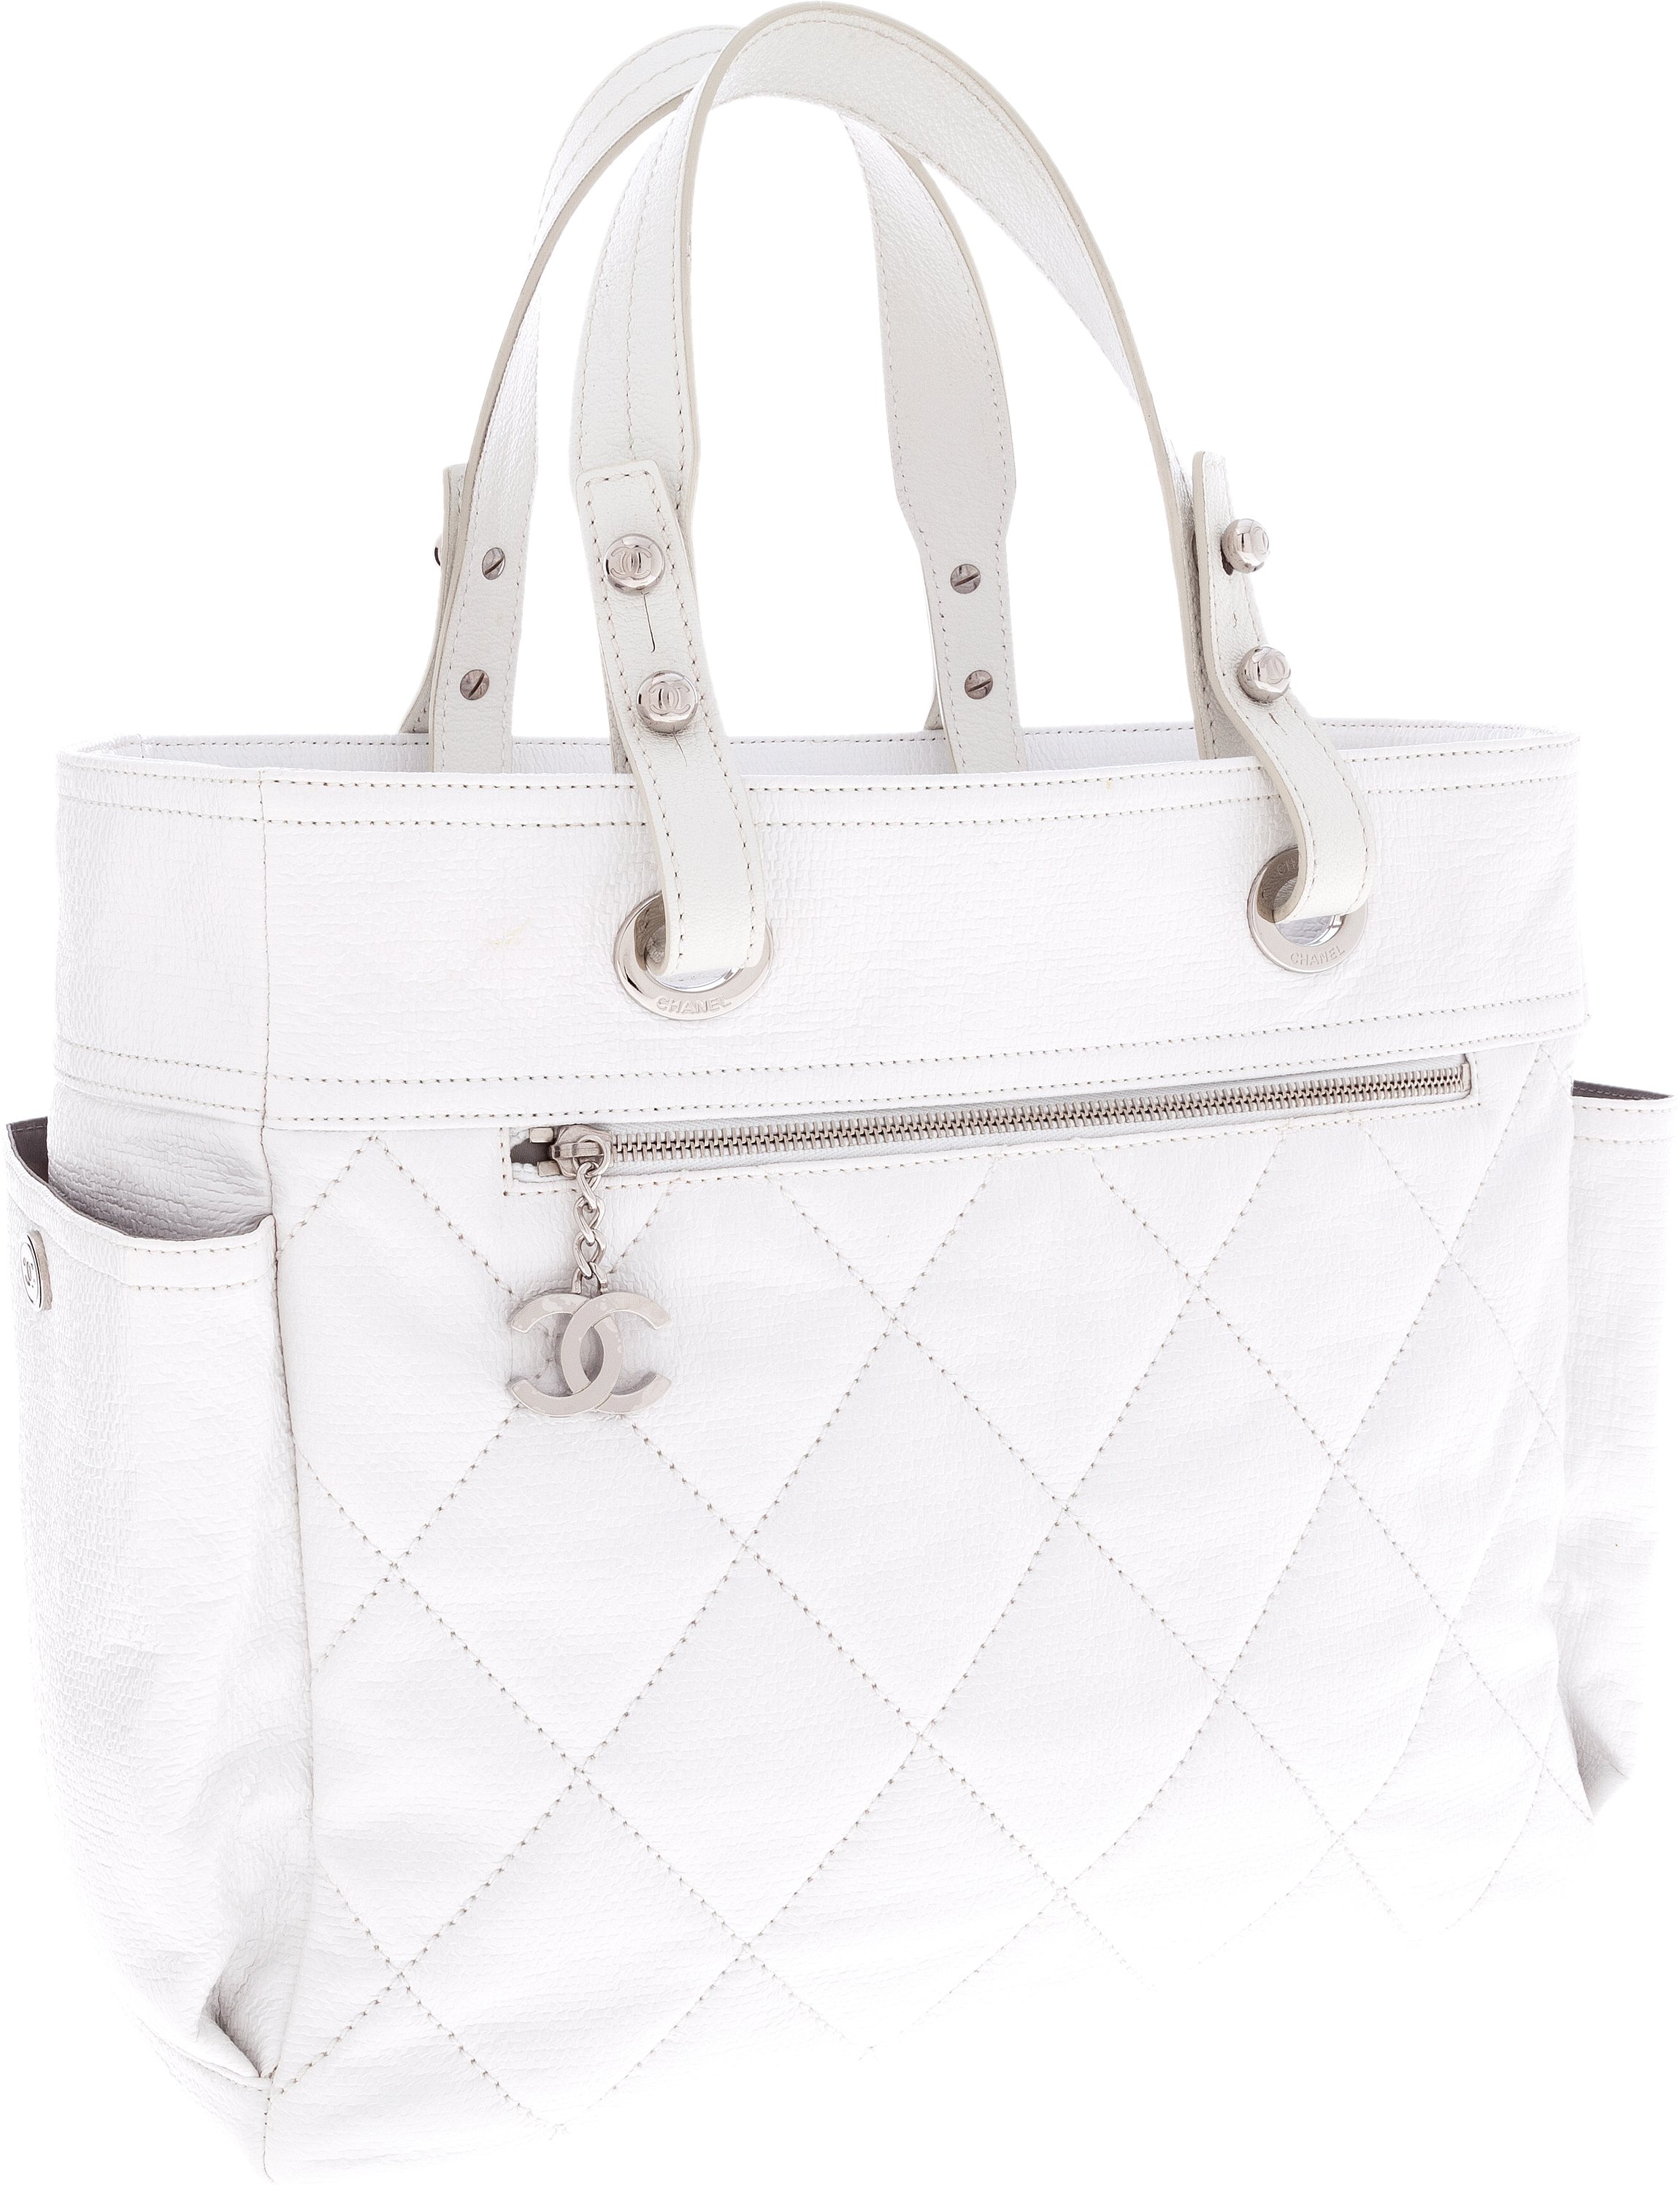 Chanel White Leather Paris-Biarritz Tote Bag.  Luxury, Lot #64287